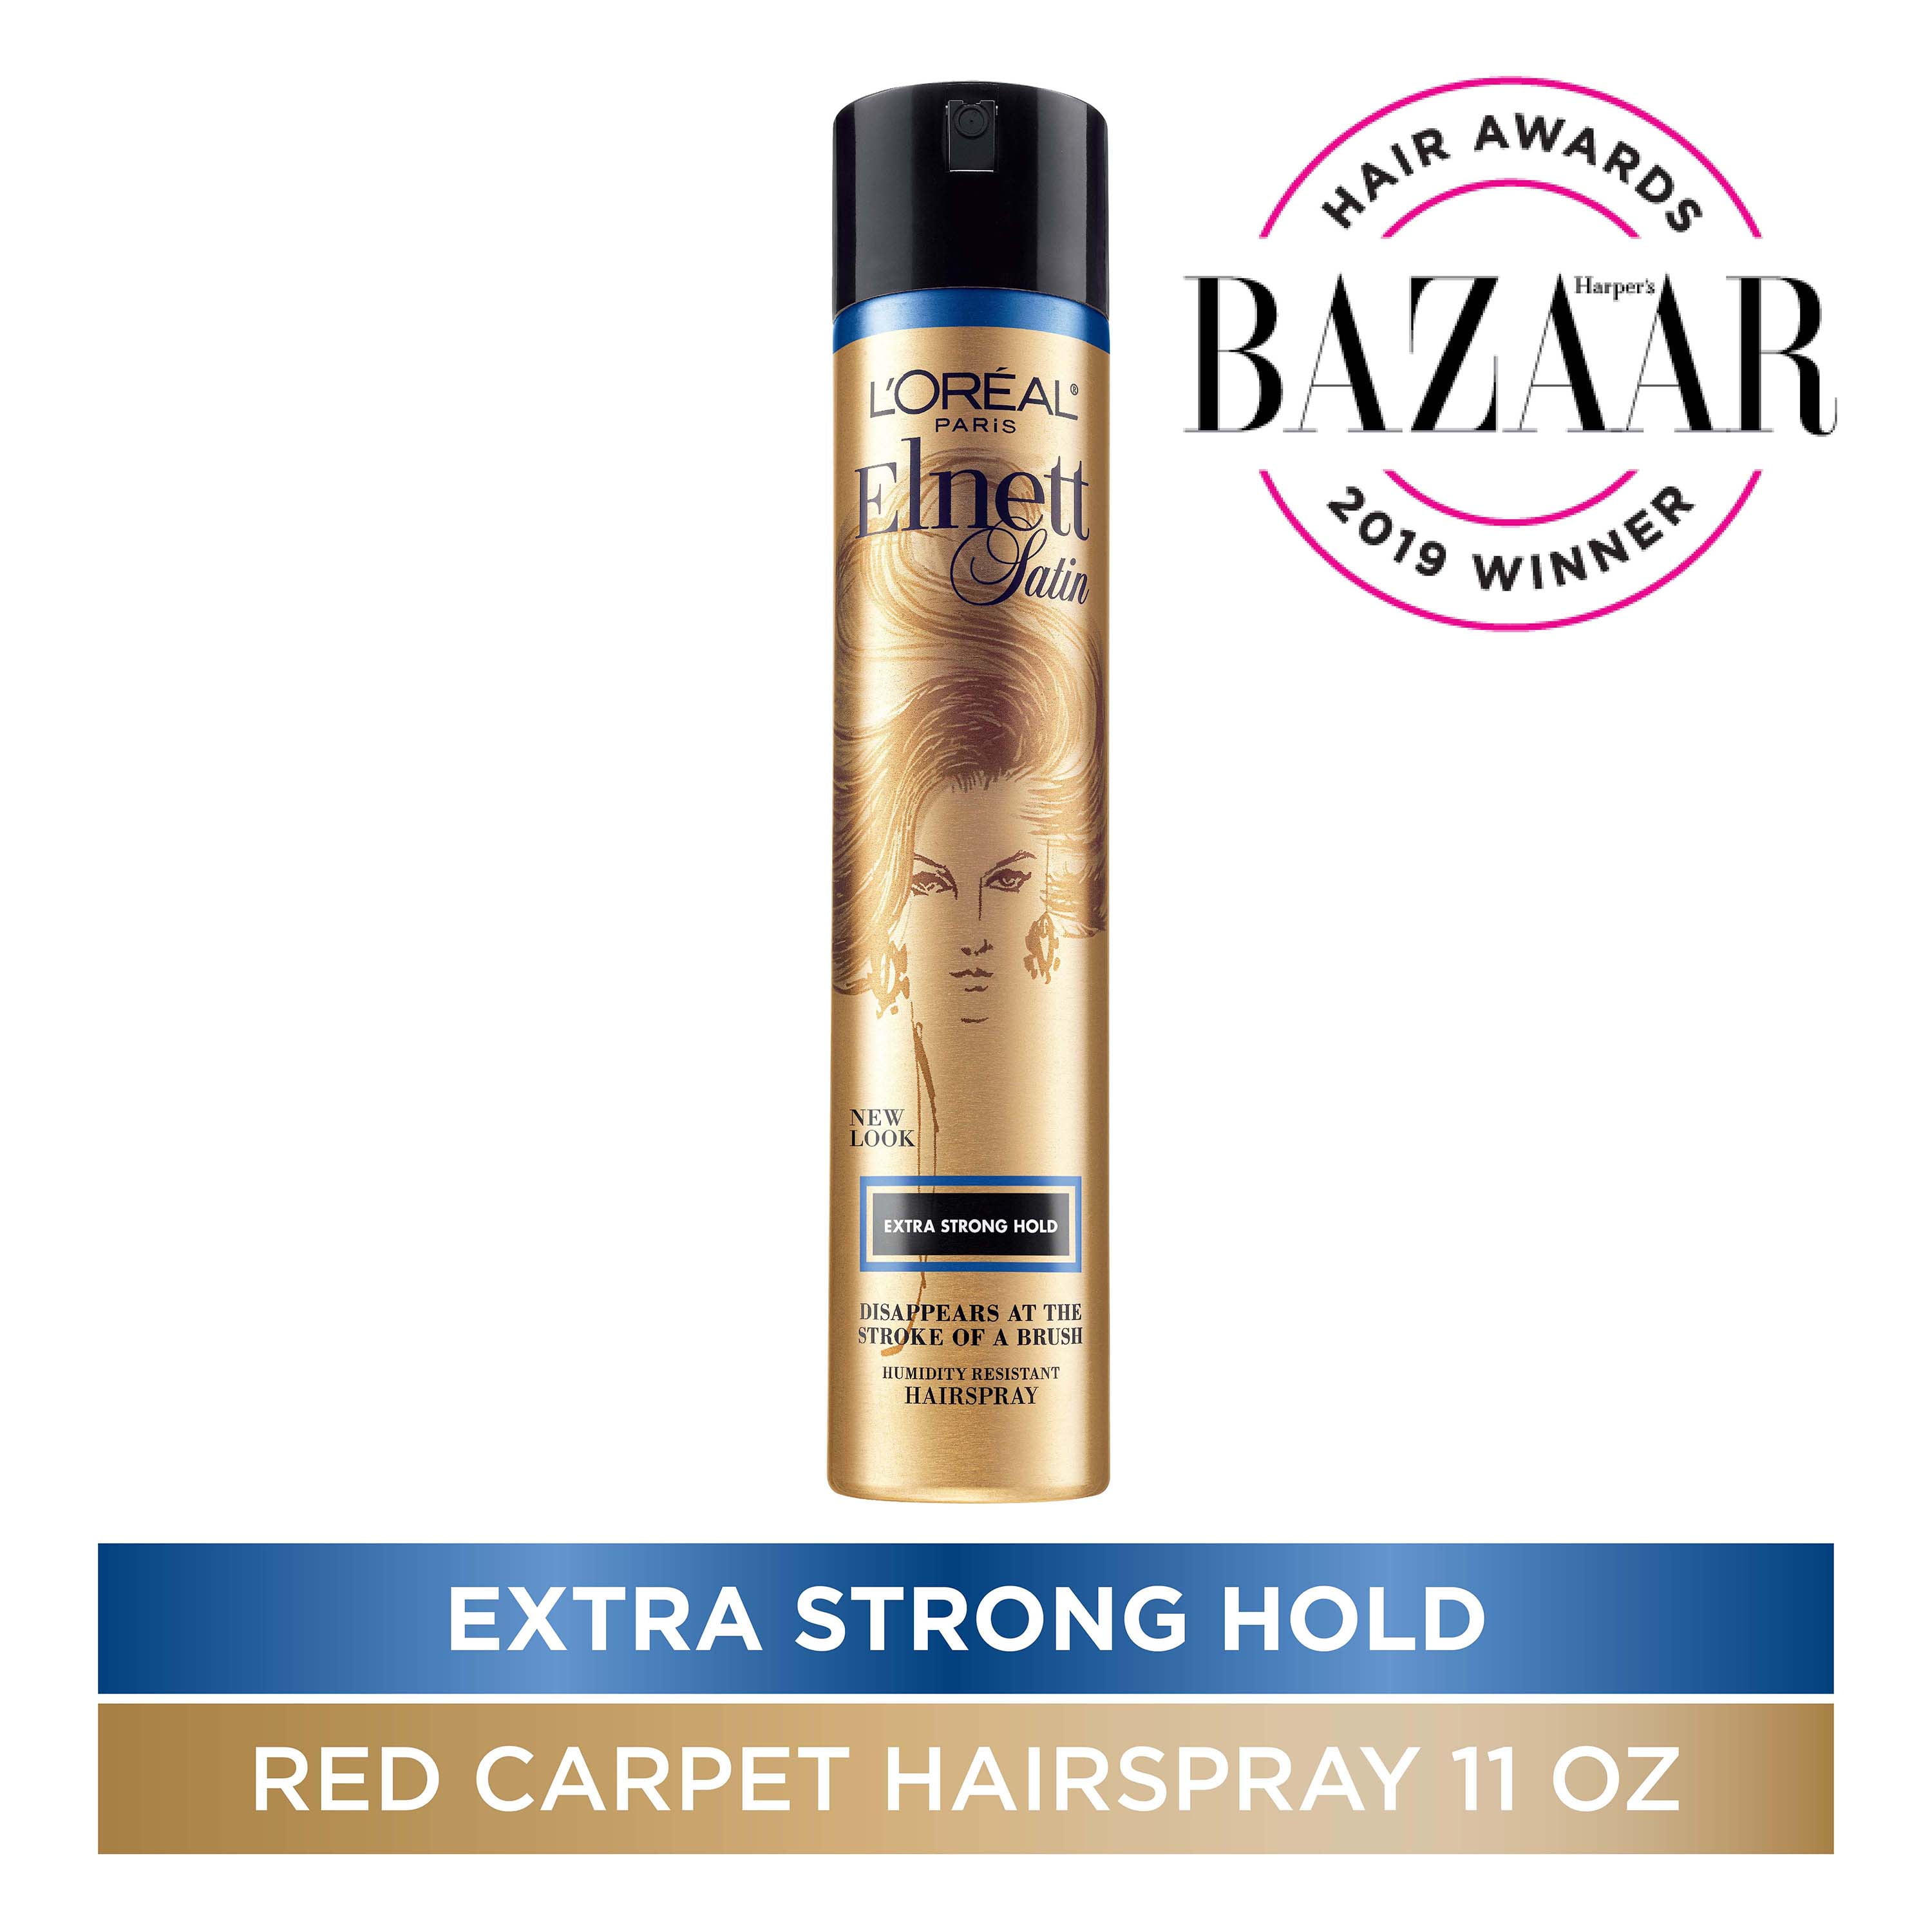 L'Oreal Elnett Satin Extra Strong Hairspray, 11 oz. Walmart.com